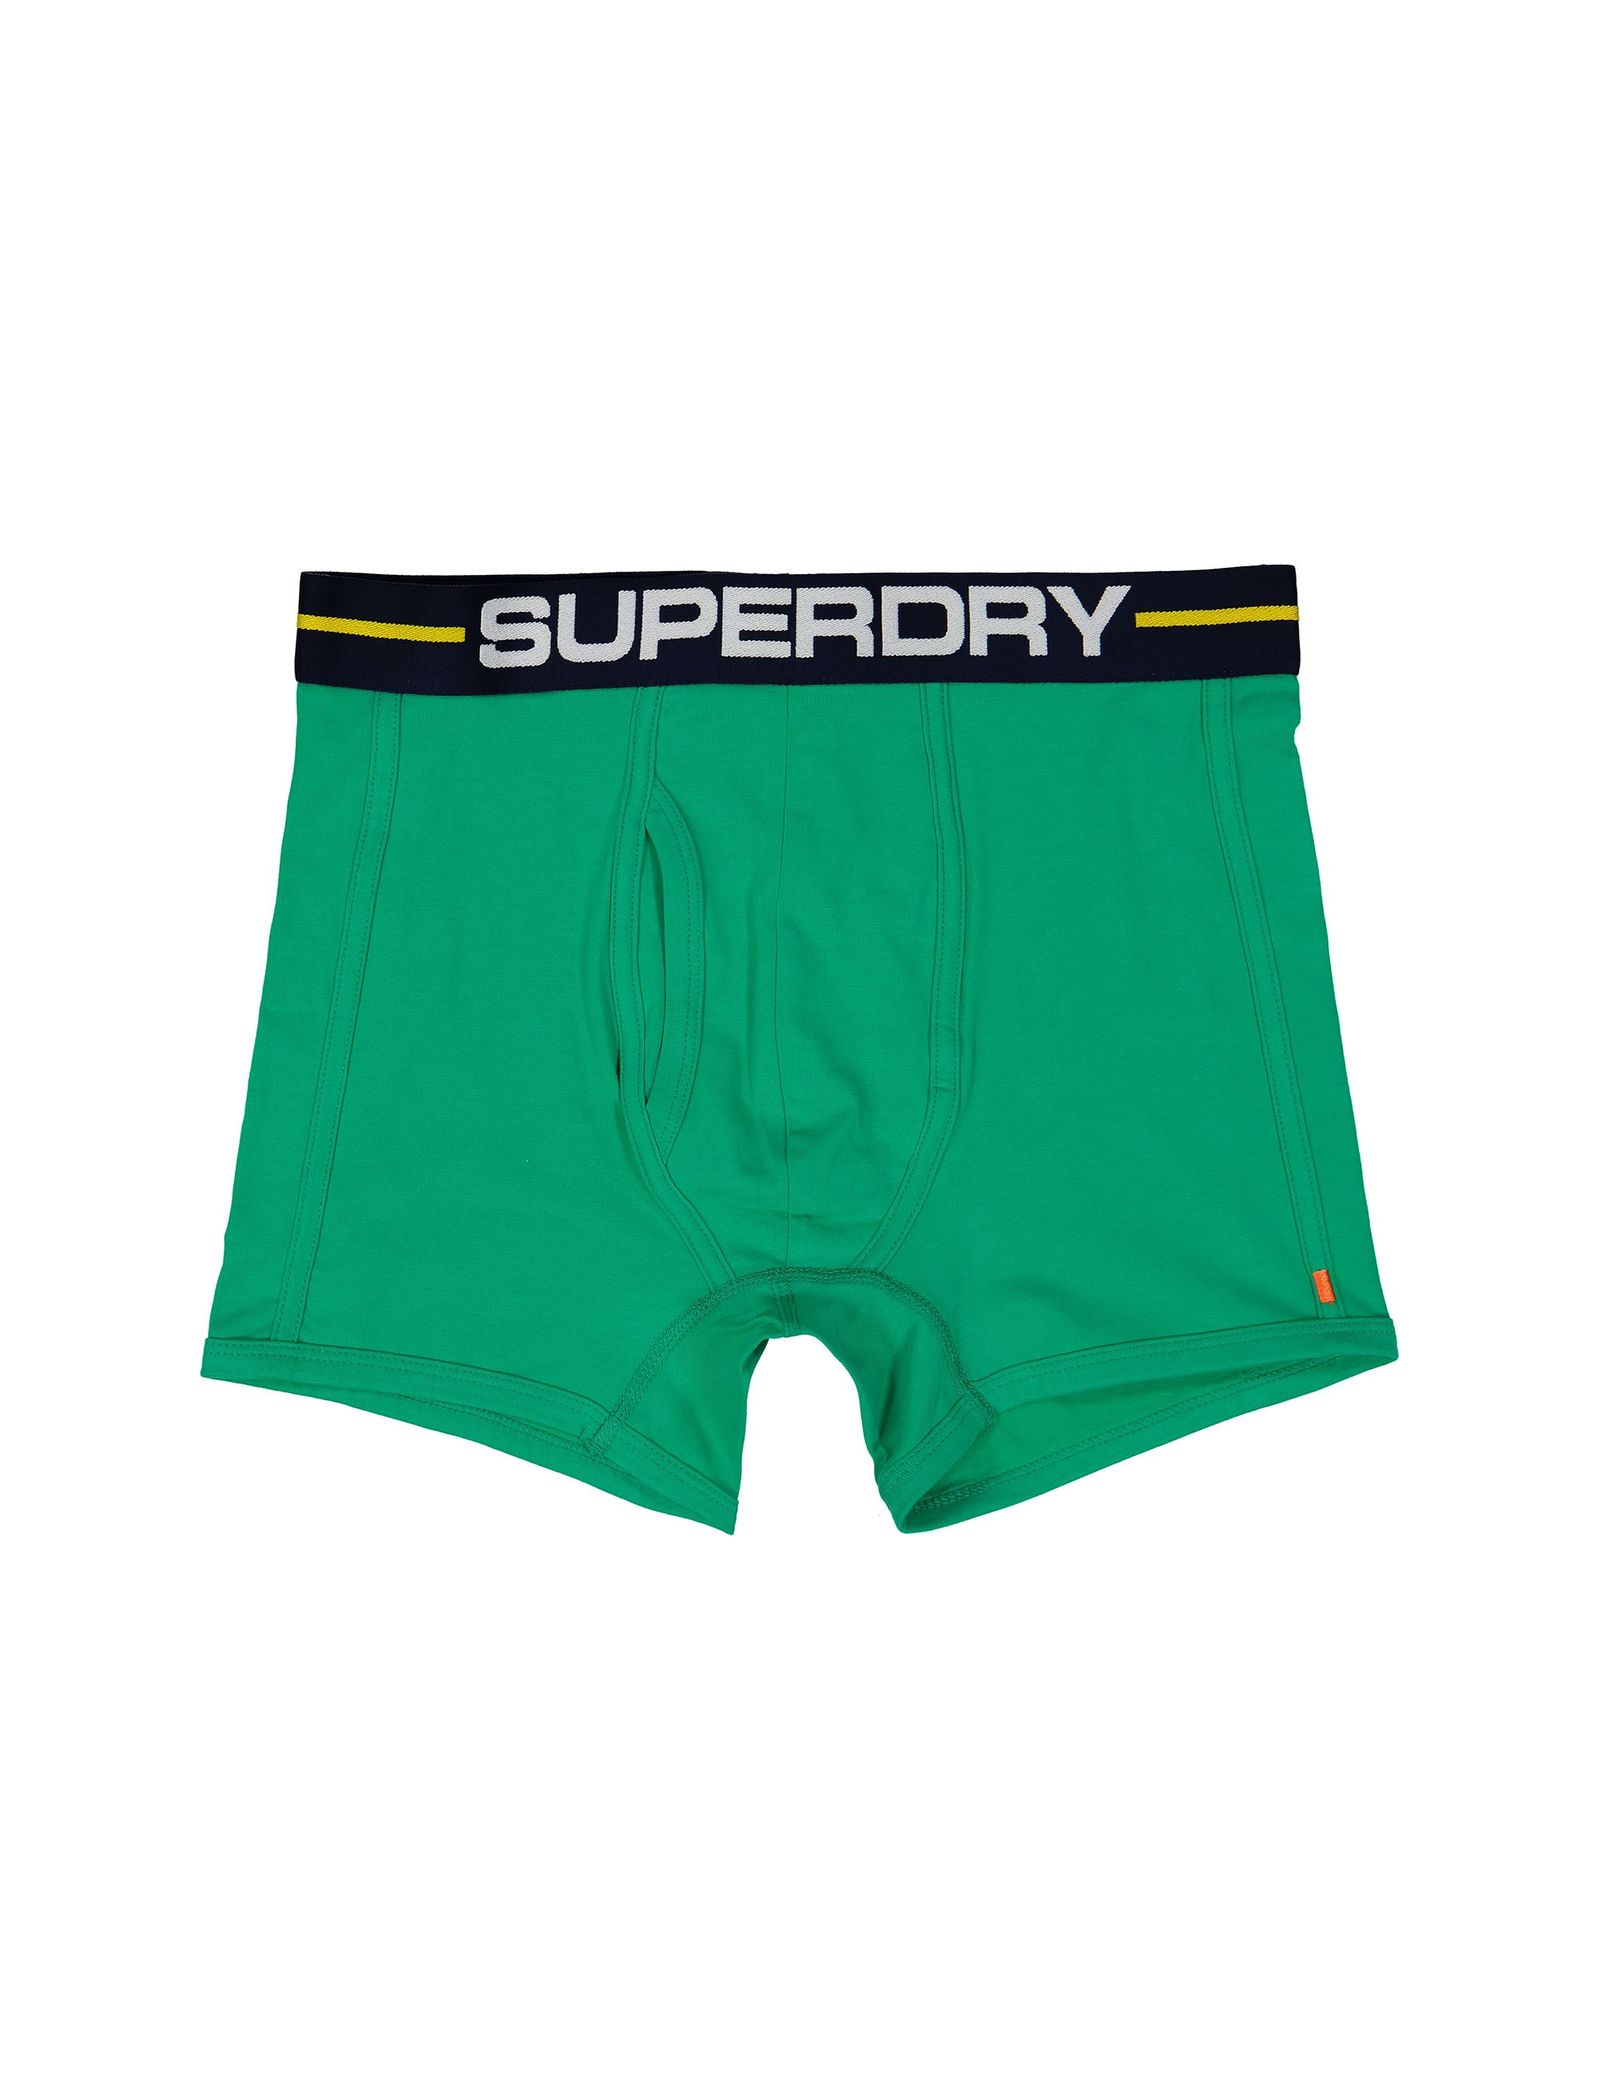 Men Cotton Boxer Underwear Pack Of 2 - سوپردرای - آبي/سبز - 6